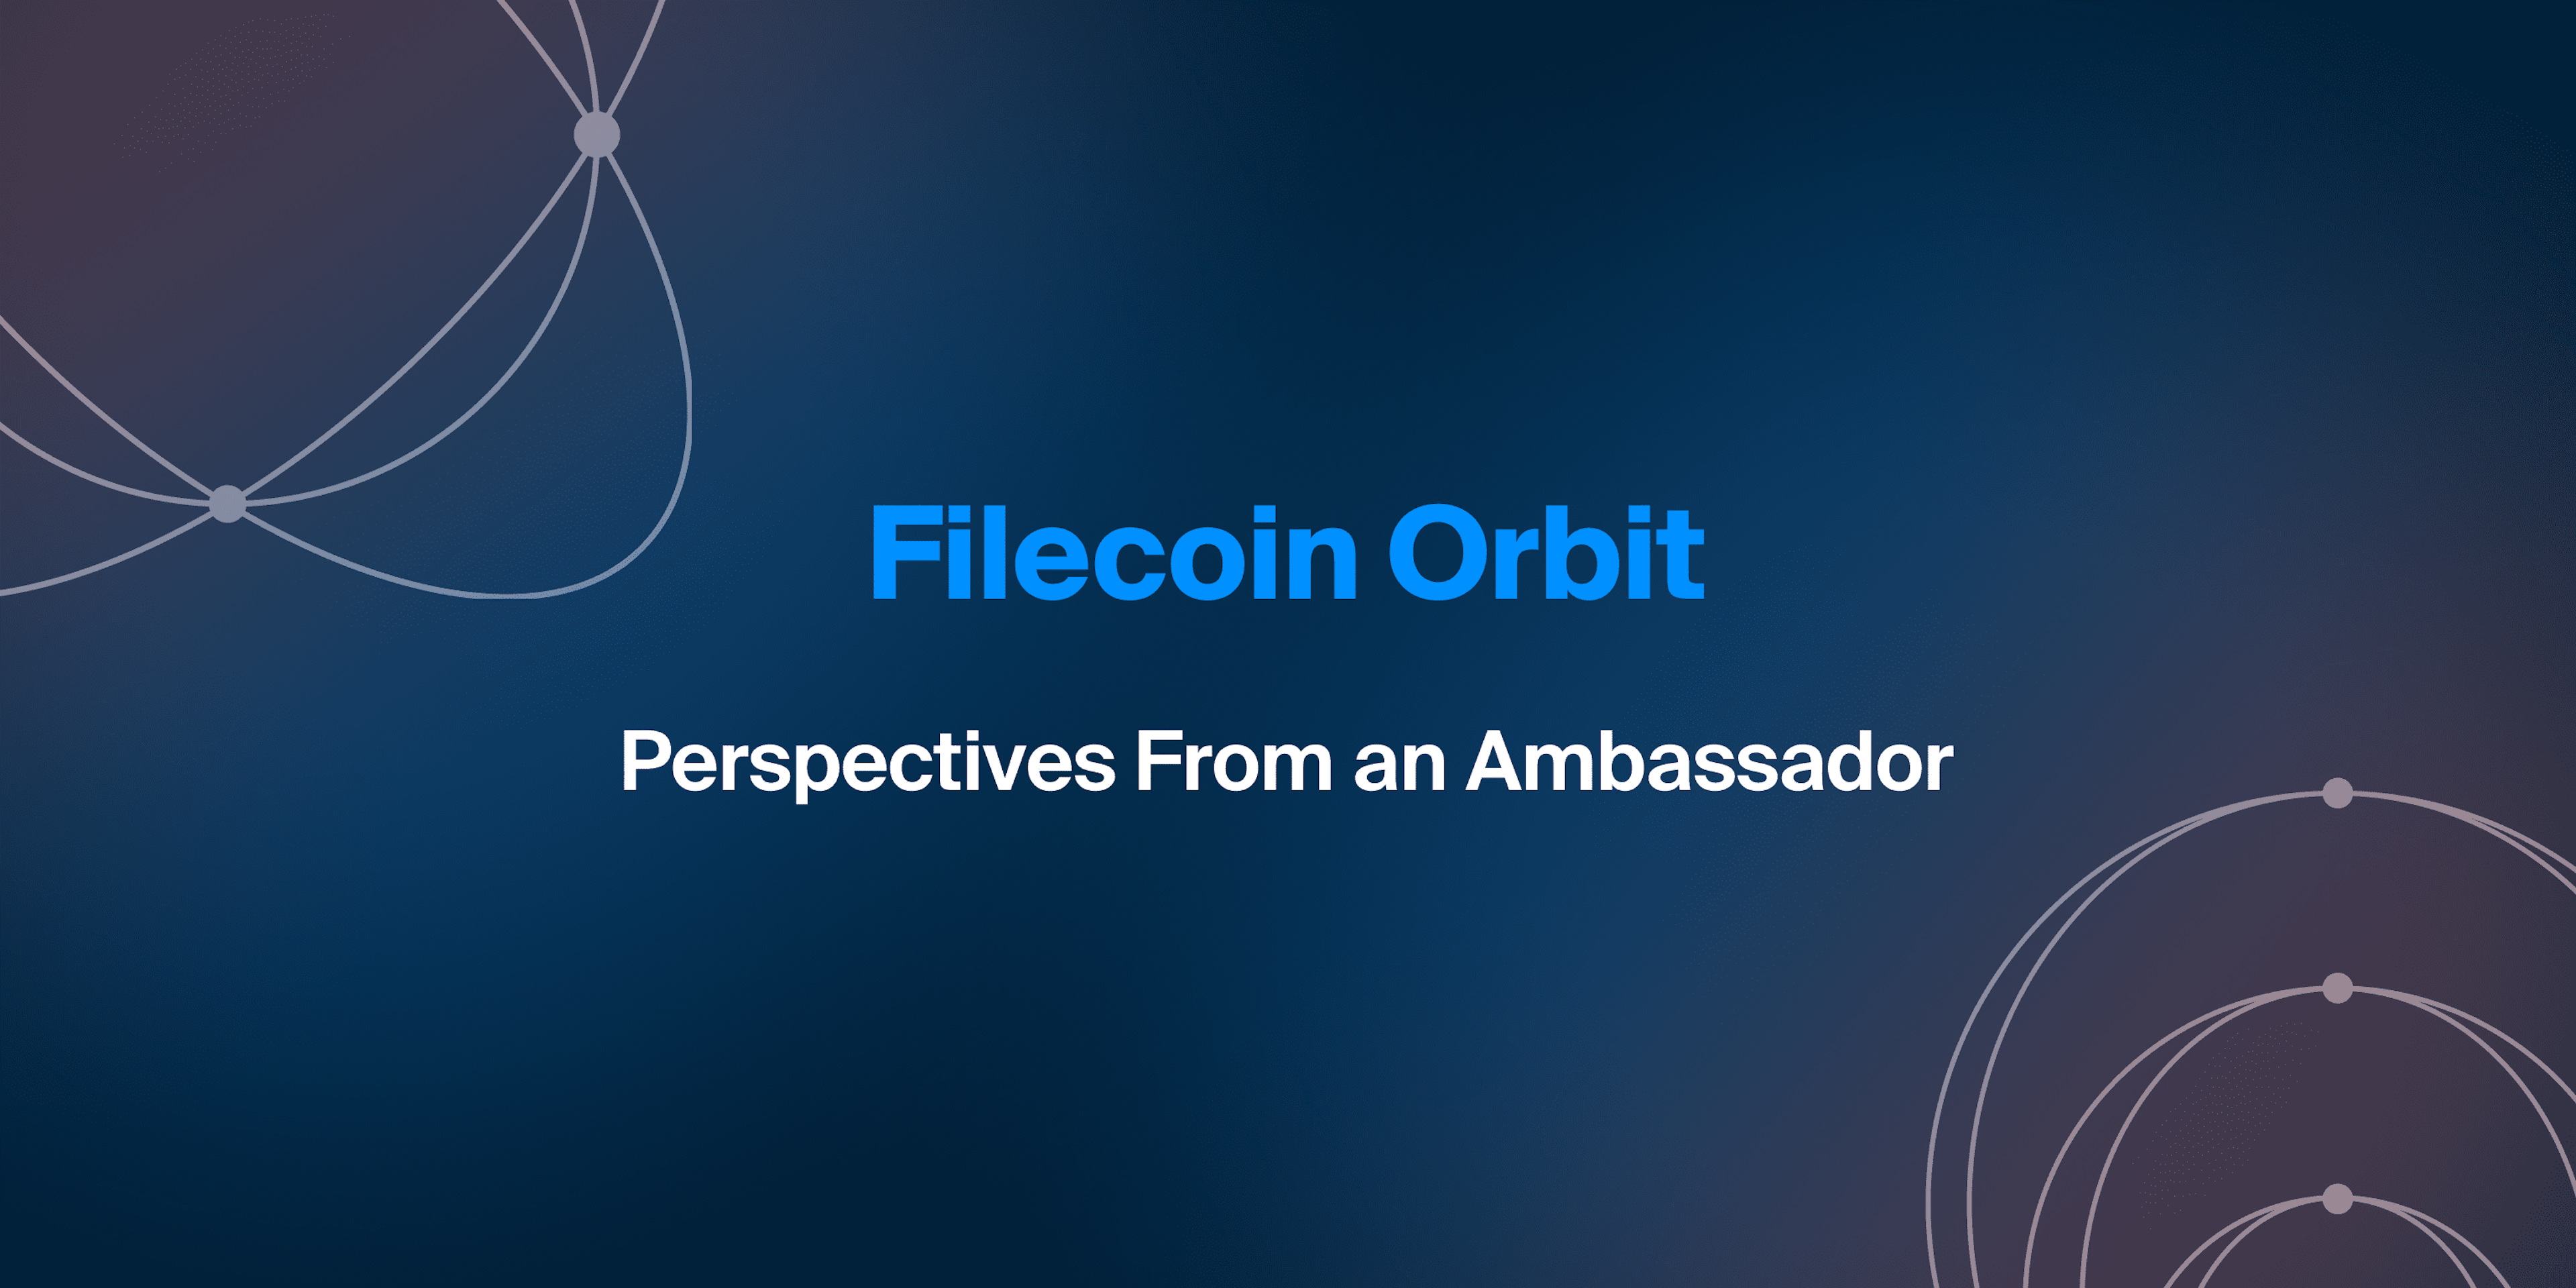 Orbiting ETHDenver: Perspectives From a Filecoin Orbit Ambassador